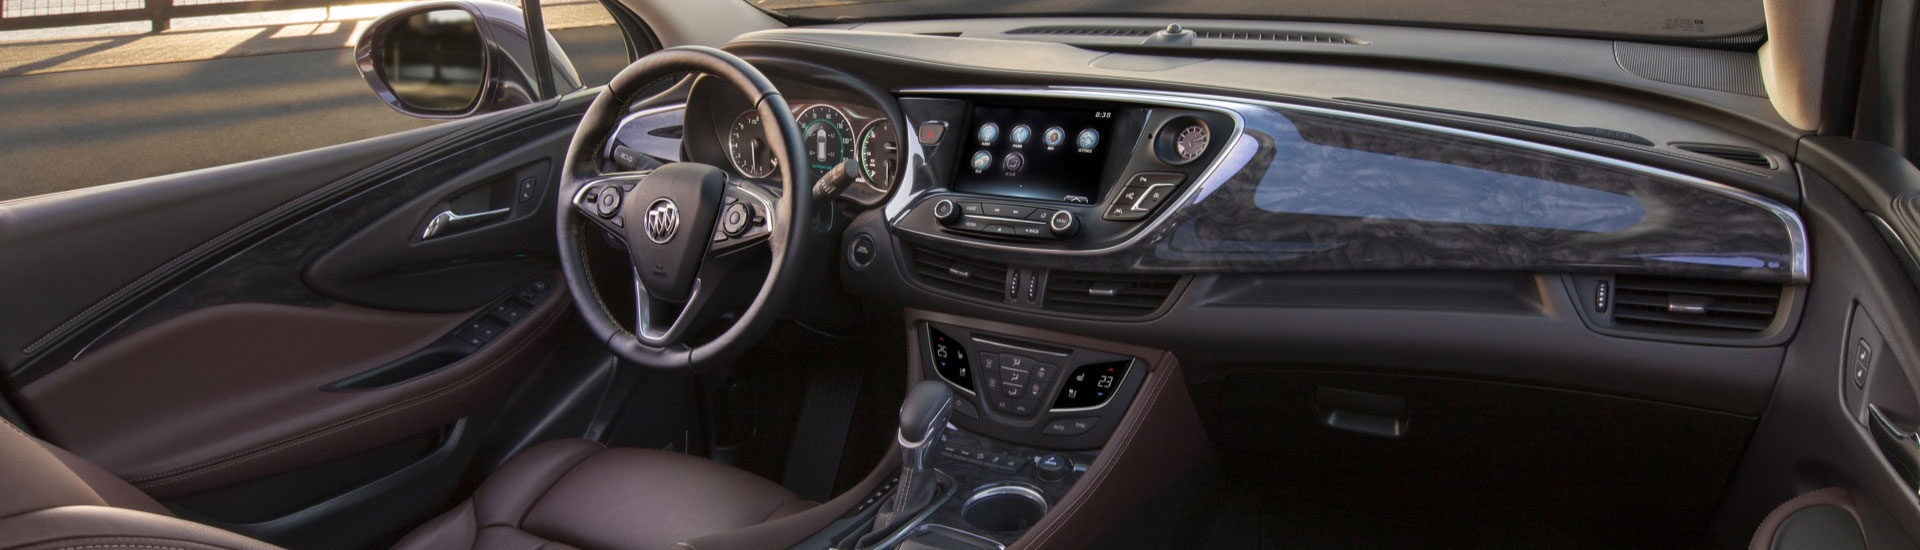 2020 Buick Envision Custom Dash Kits